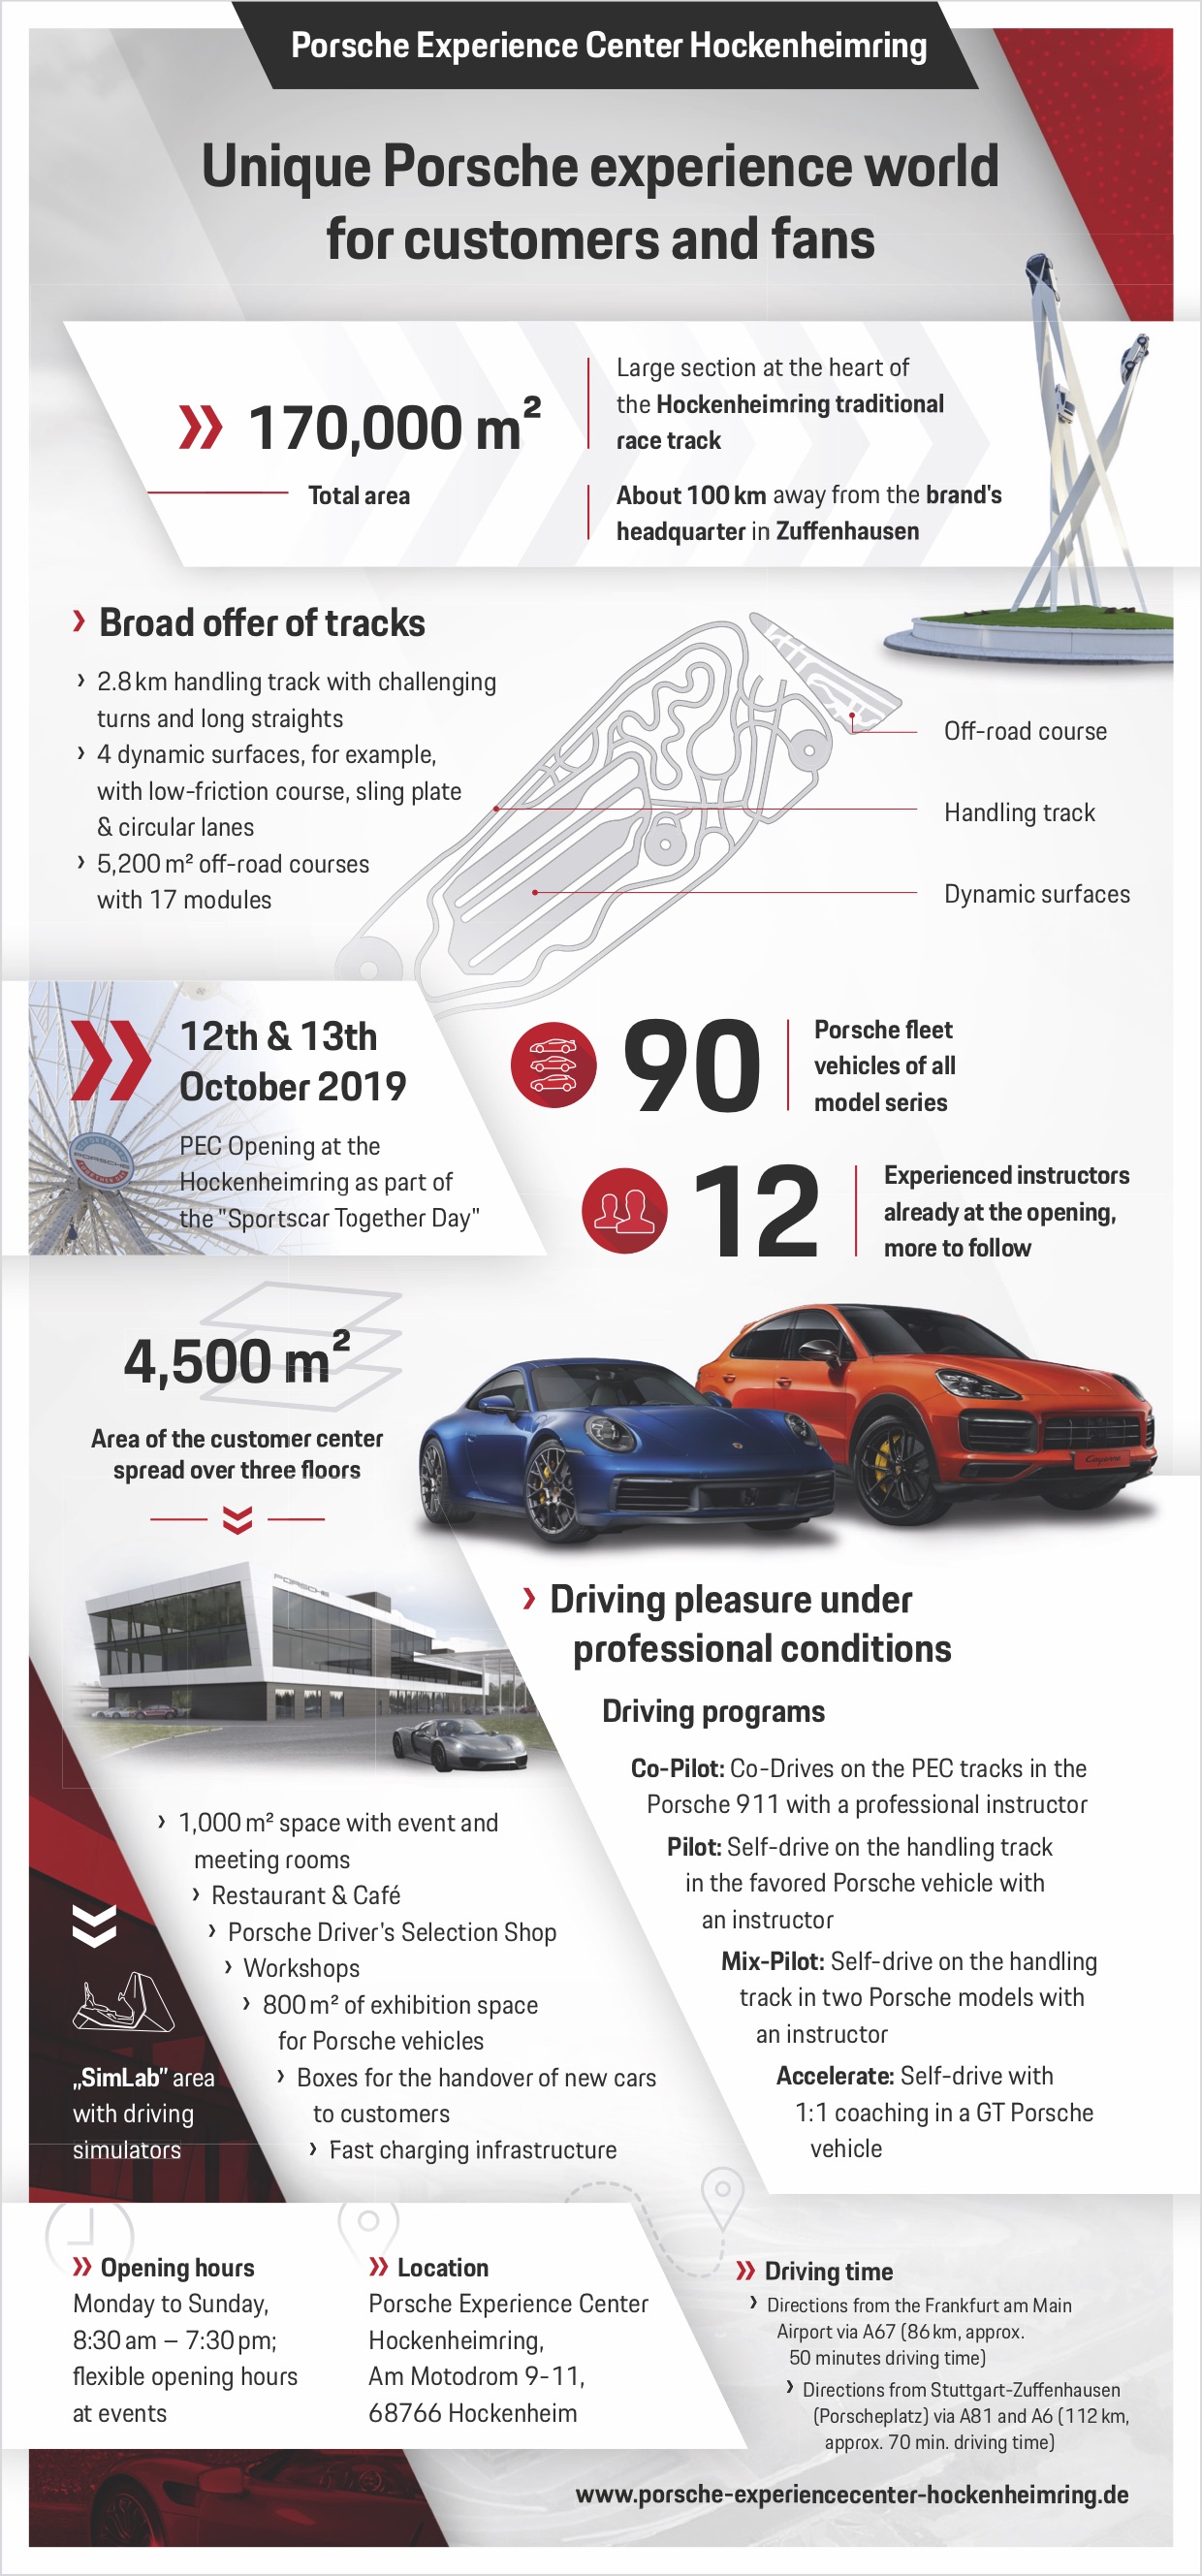 Porsche Experience Center Hockenheimring, info graphic, 2019, Porsche AG